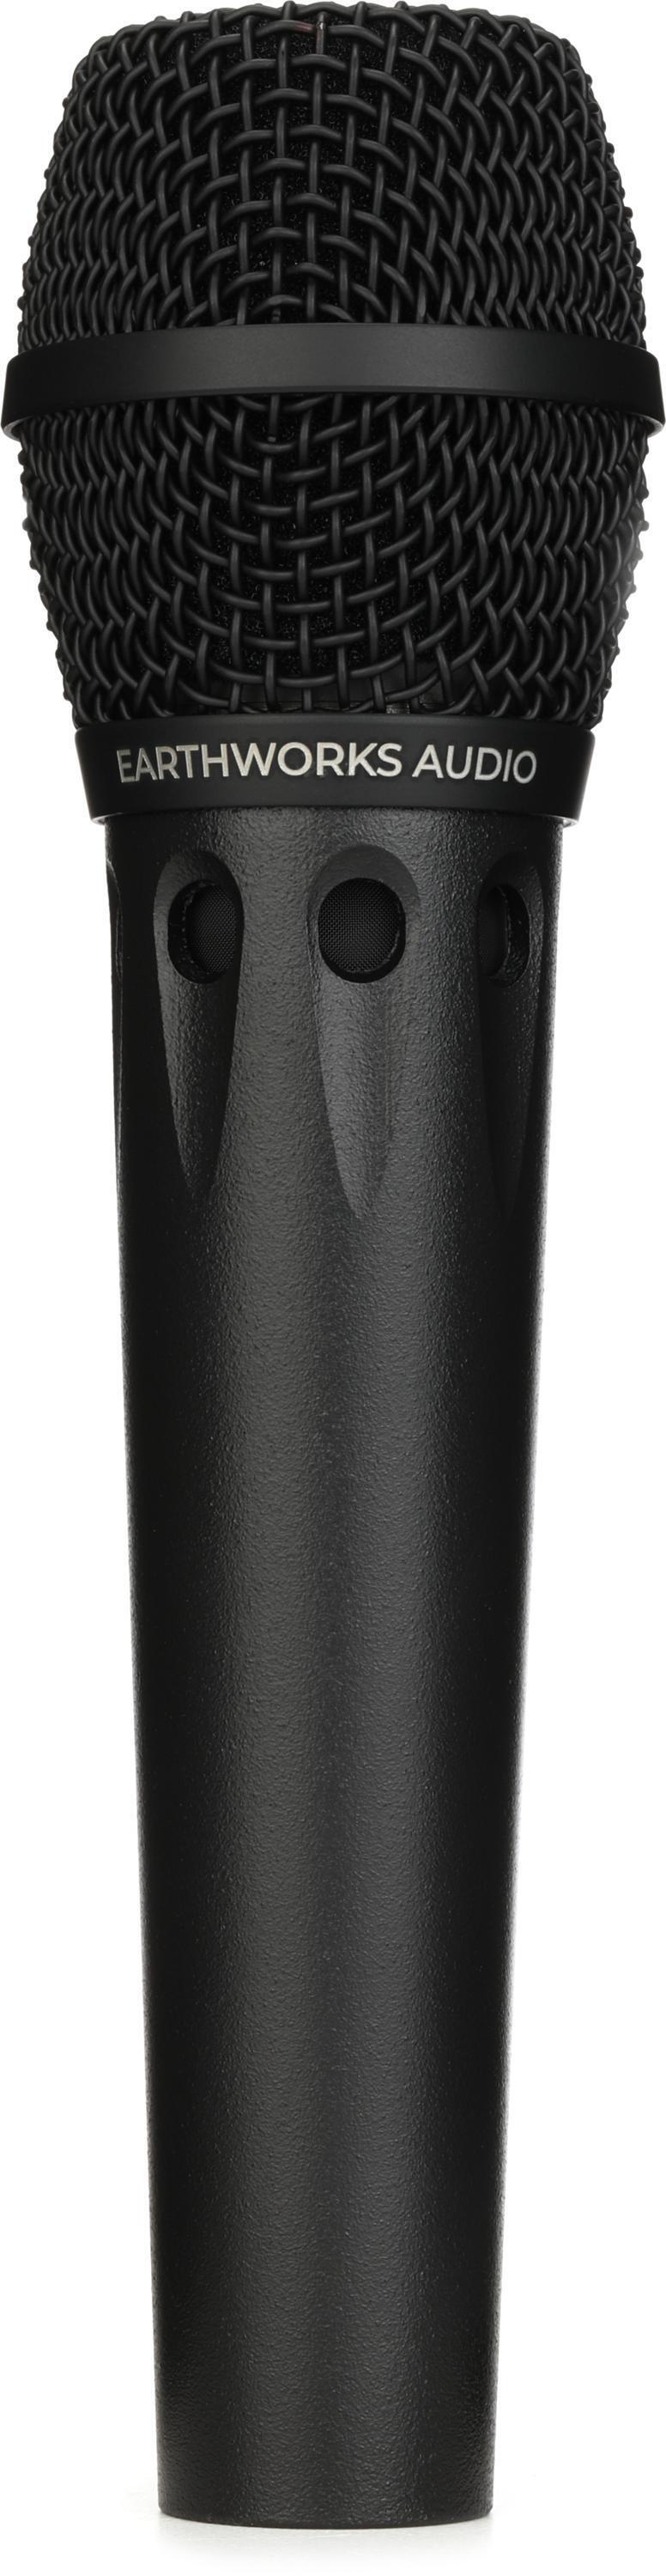 Earthworks SR40V Hypercardioid Condenser Handheld Vocal 